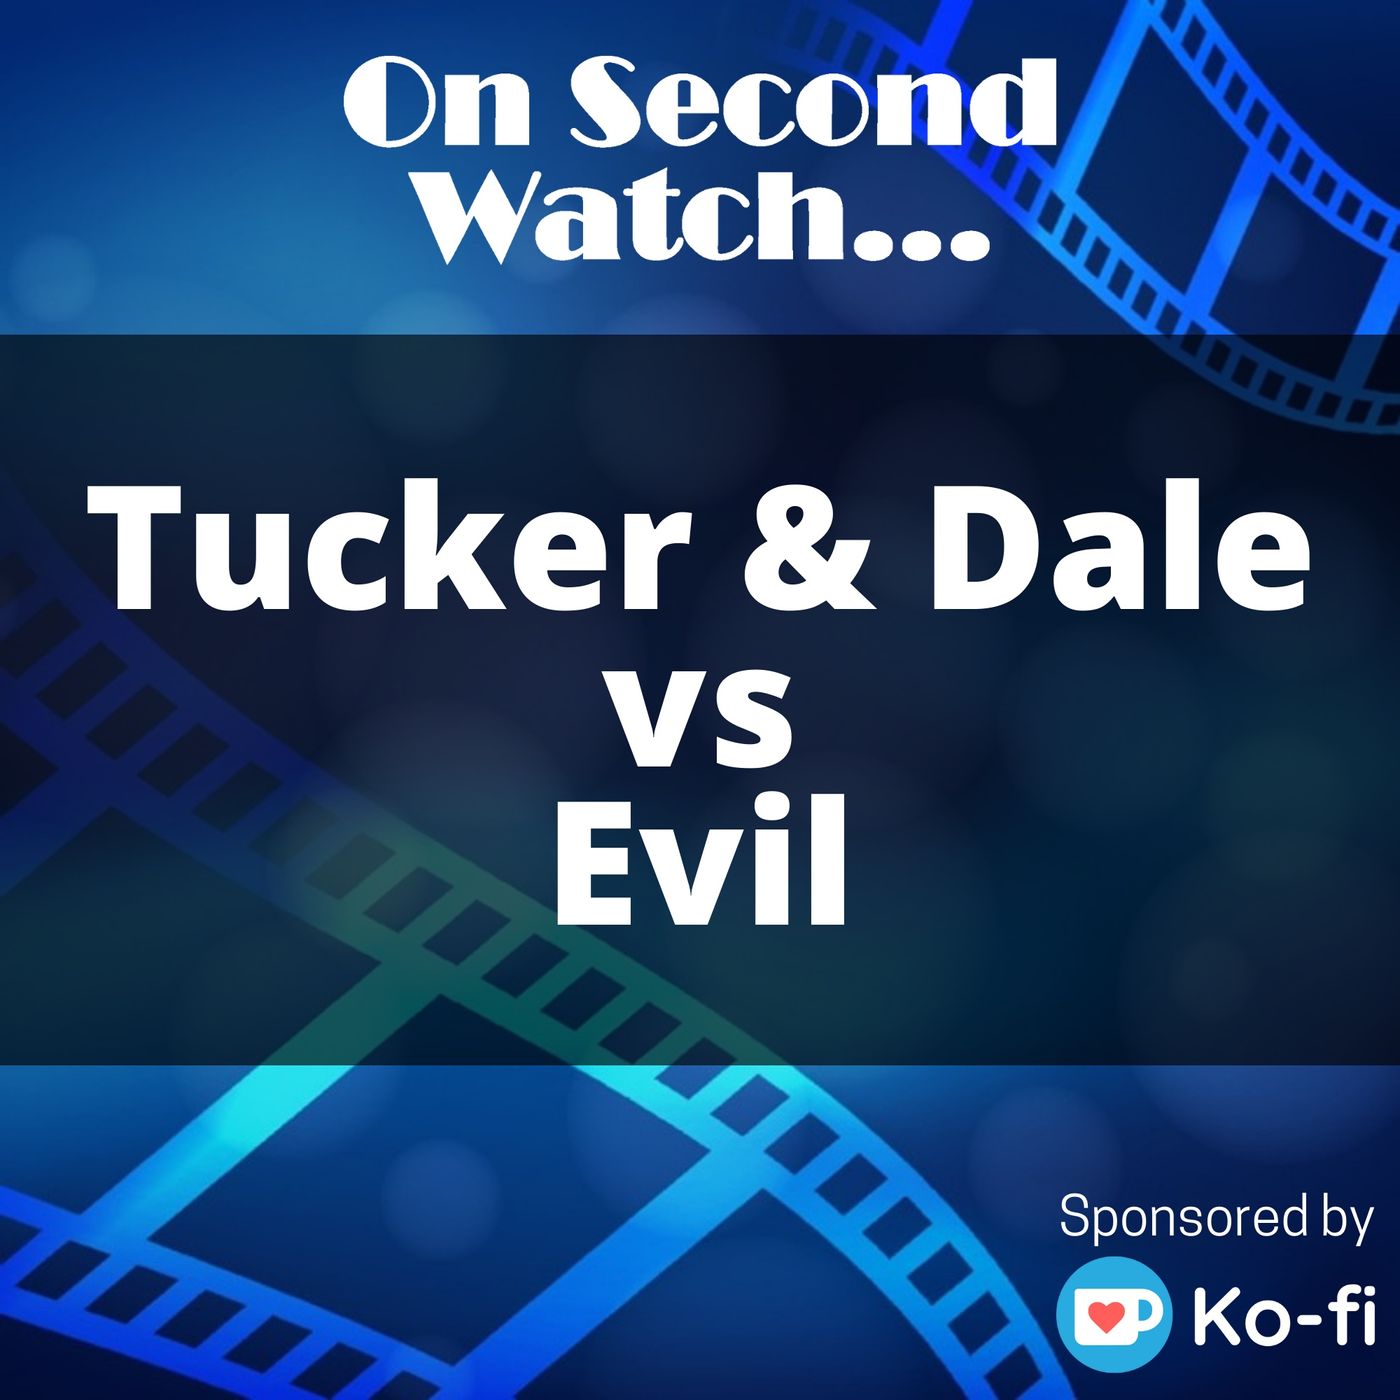 Tucker & Dale vs. Evil (2010) - "You guys uhh... goin' camping?"